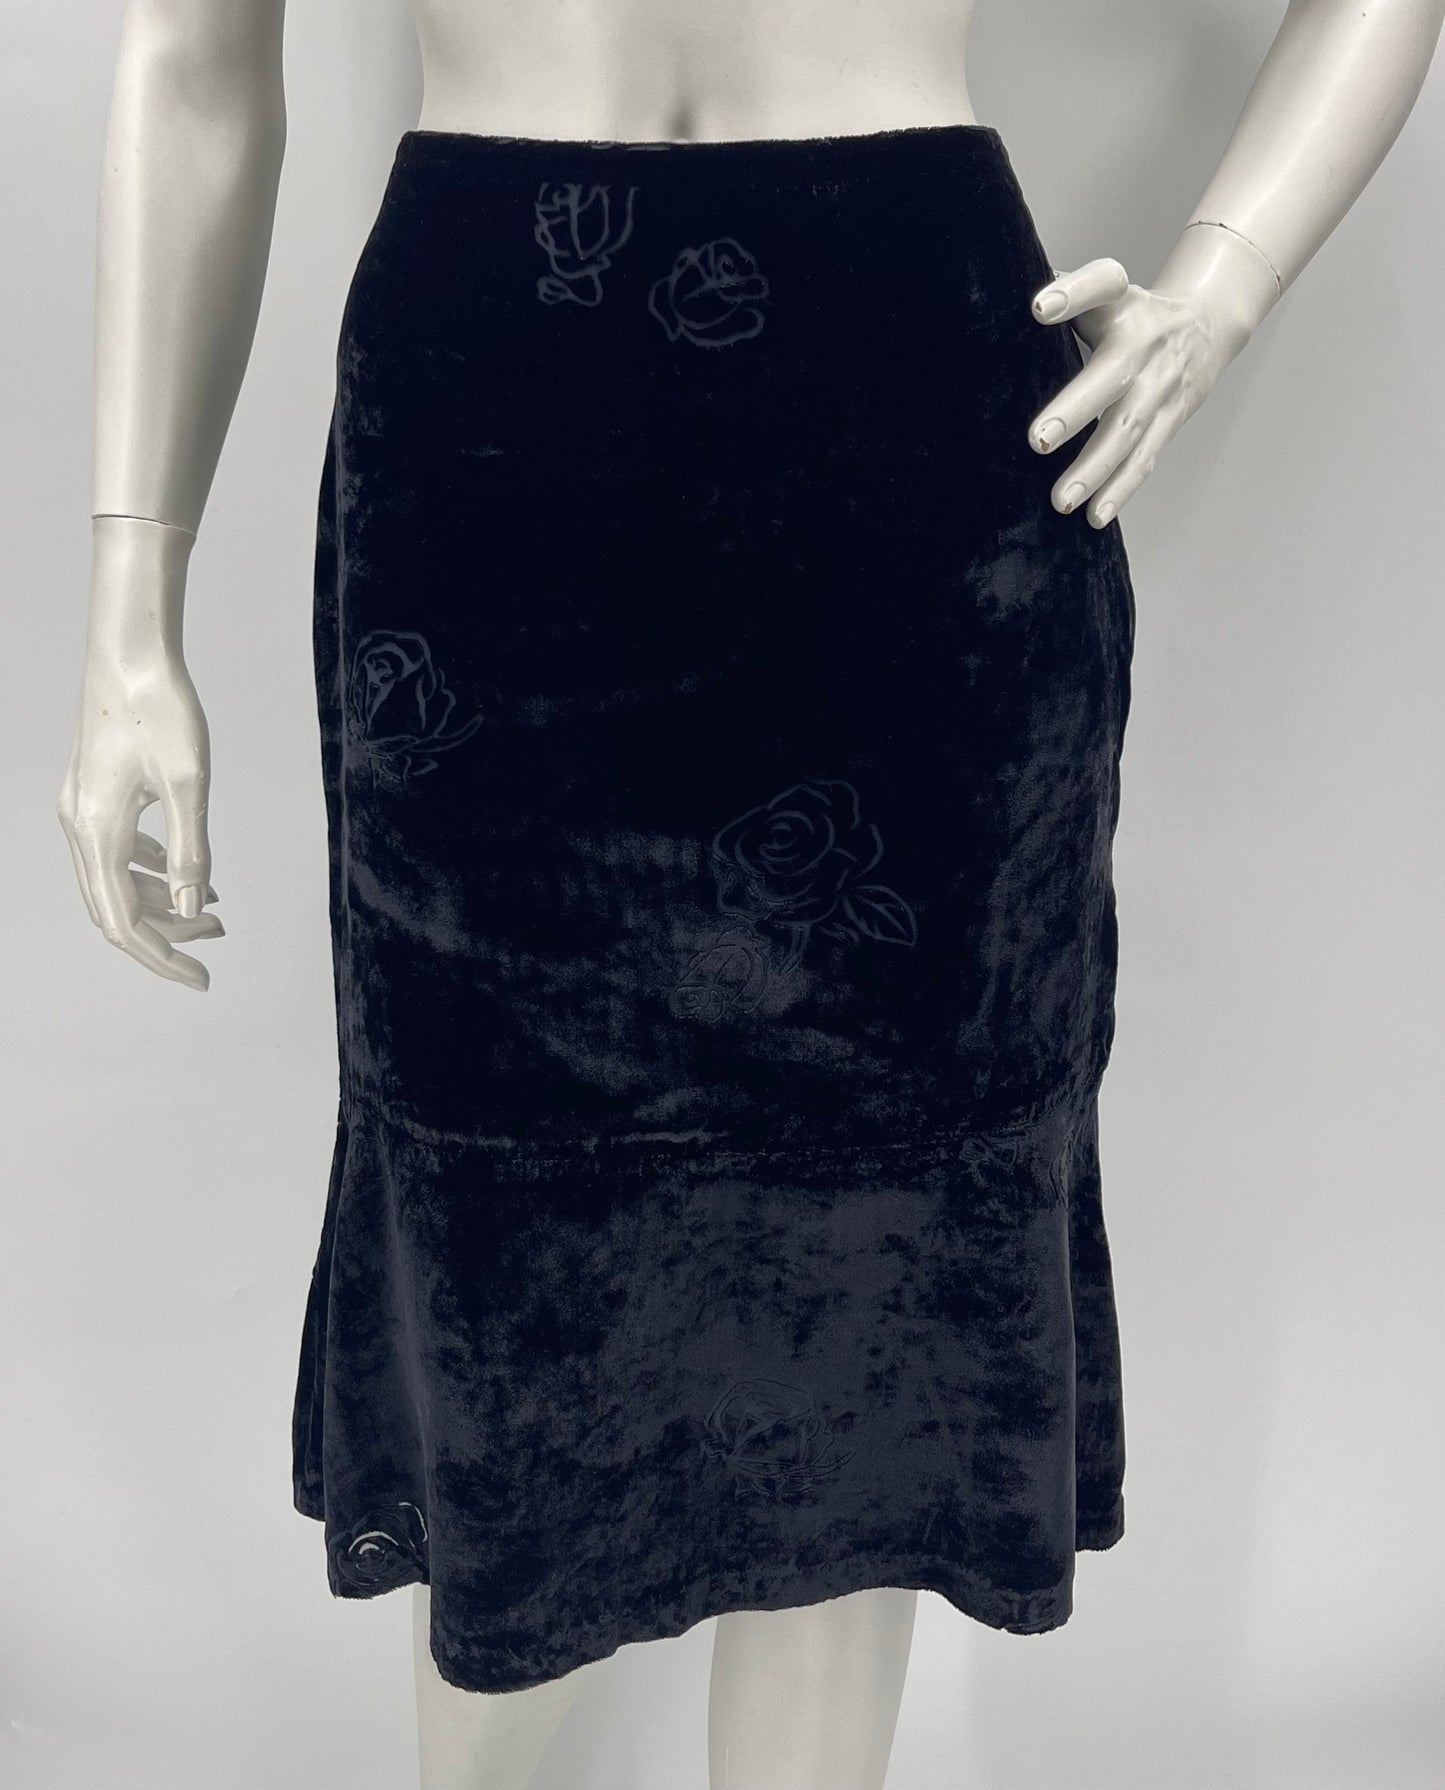 Hennes Collection, musta samettihame, 90-luku, vyöt.ymp. 72cm, koko 36